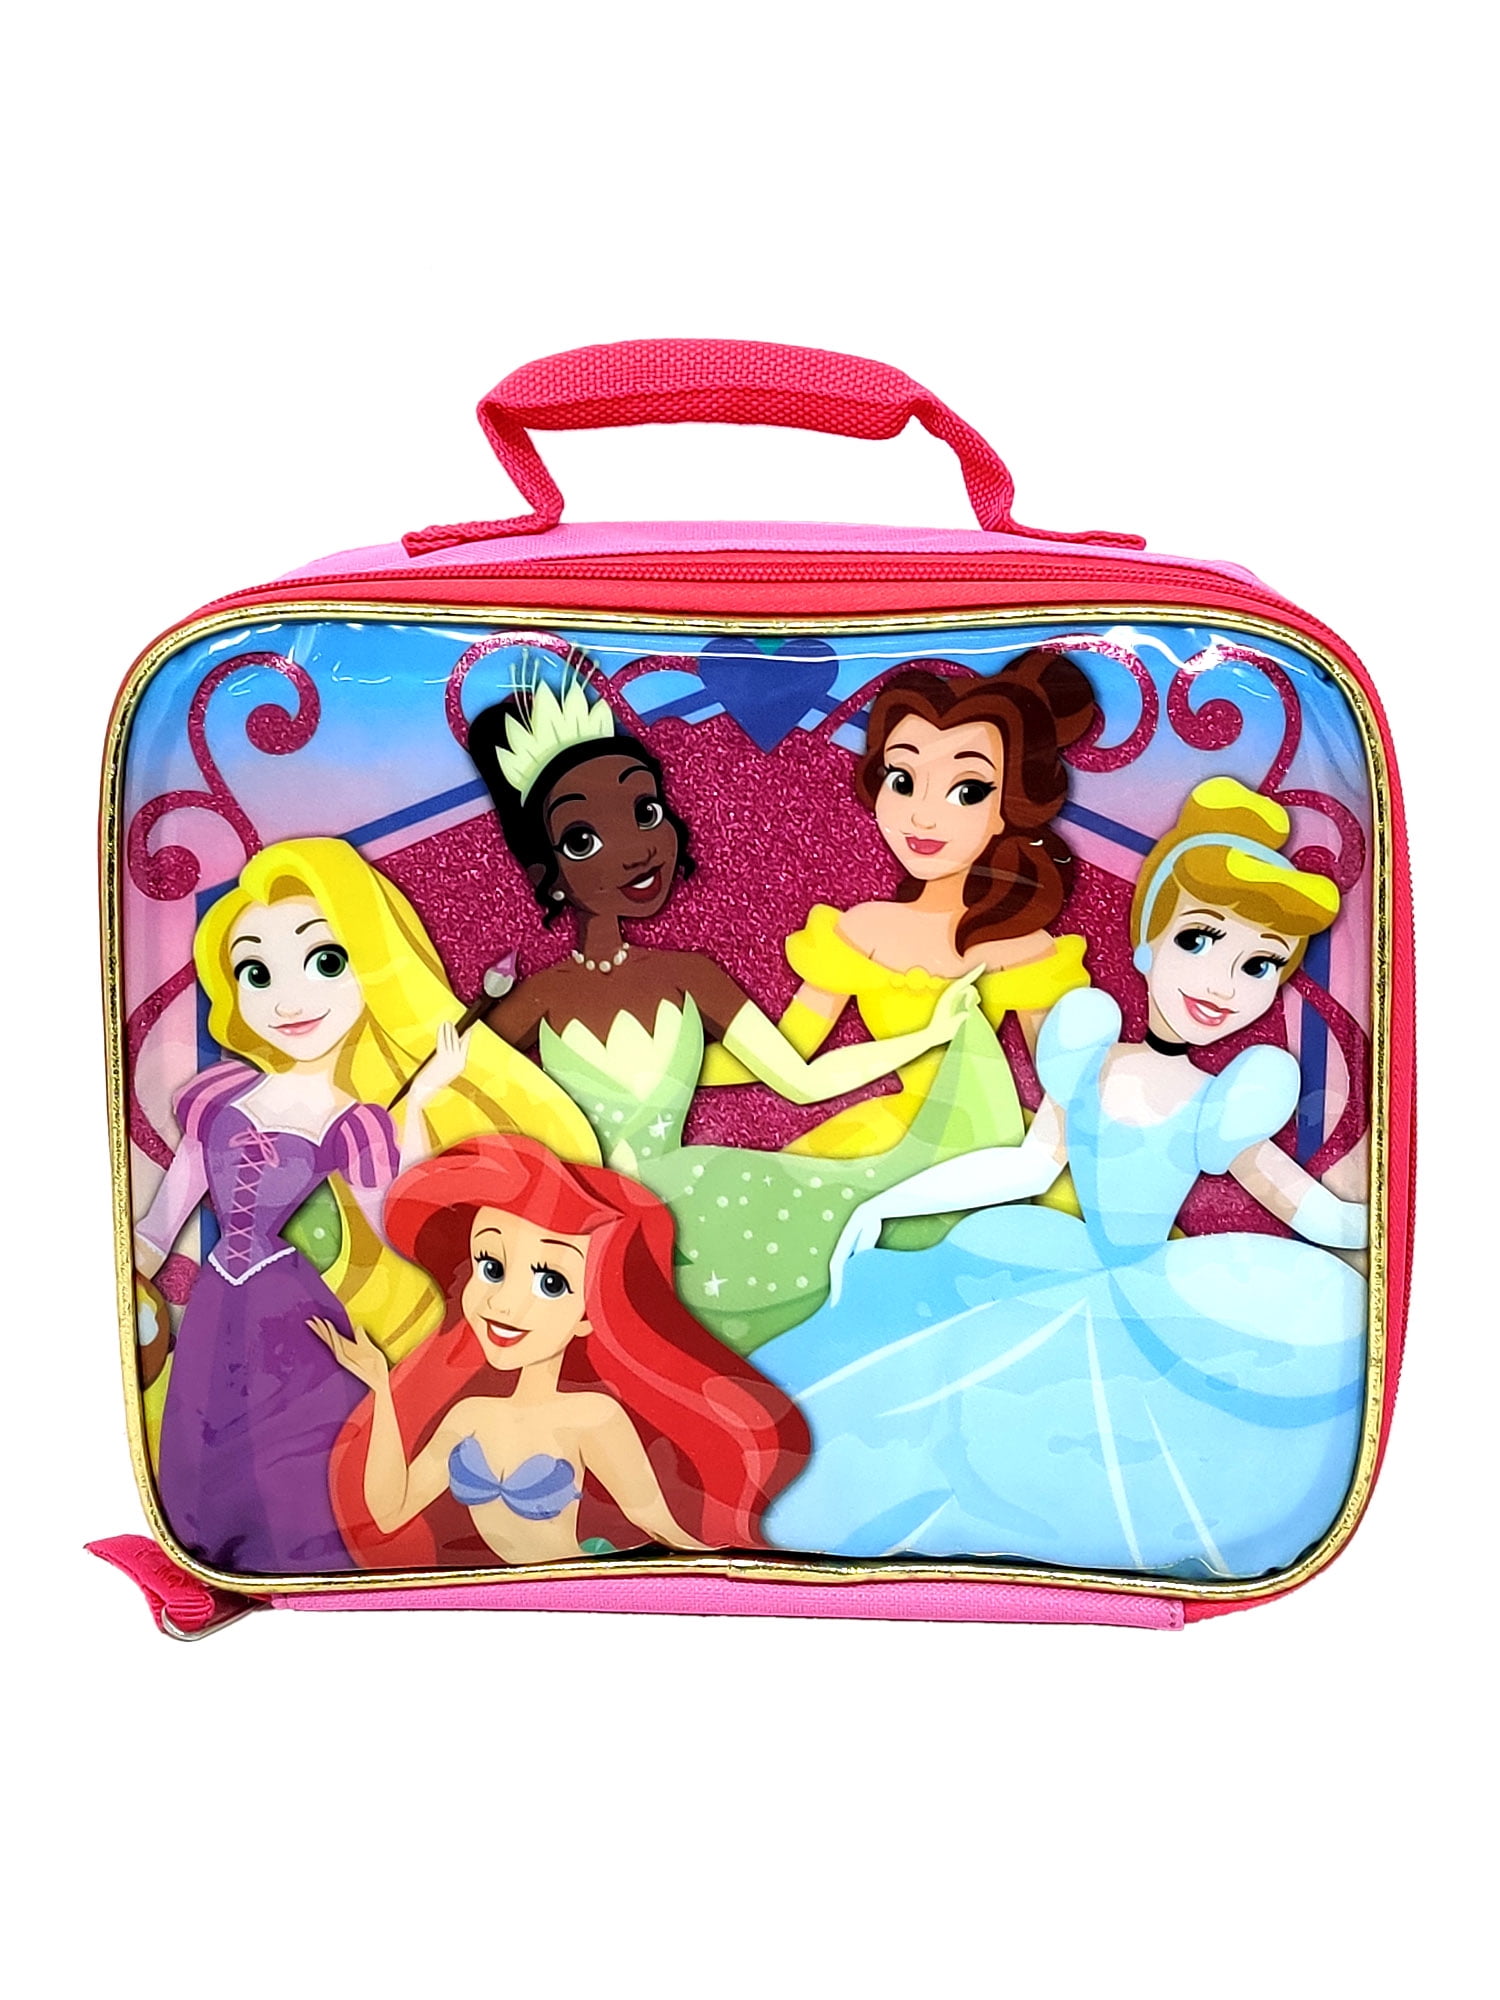 Disney Princesses Lunch Bag Insulated Ariel Cinderella Tiana Belle ...